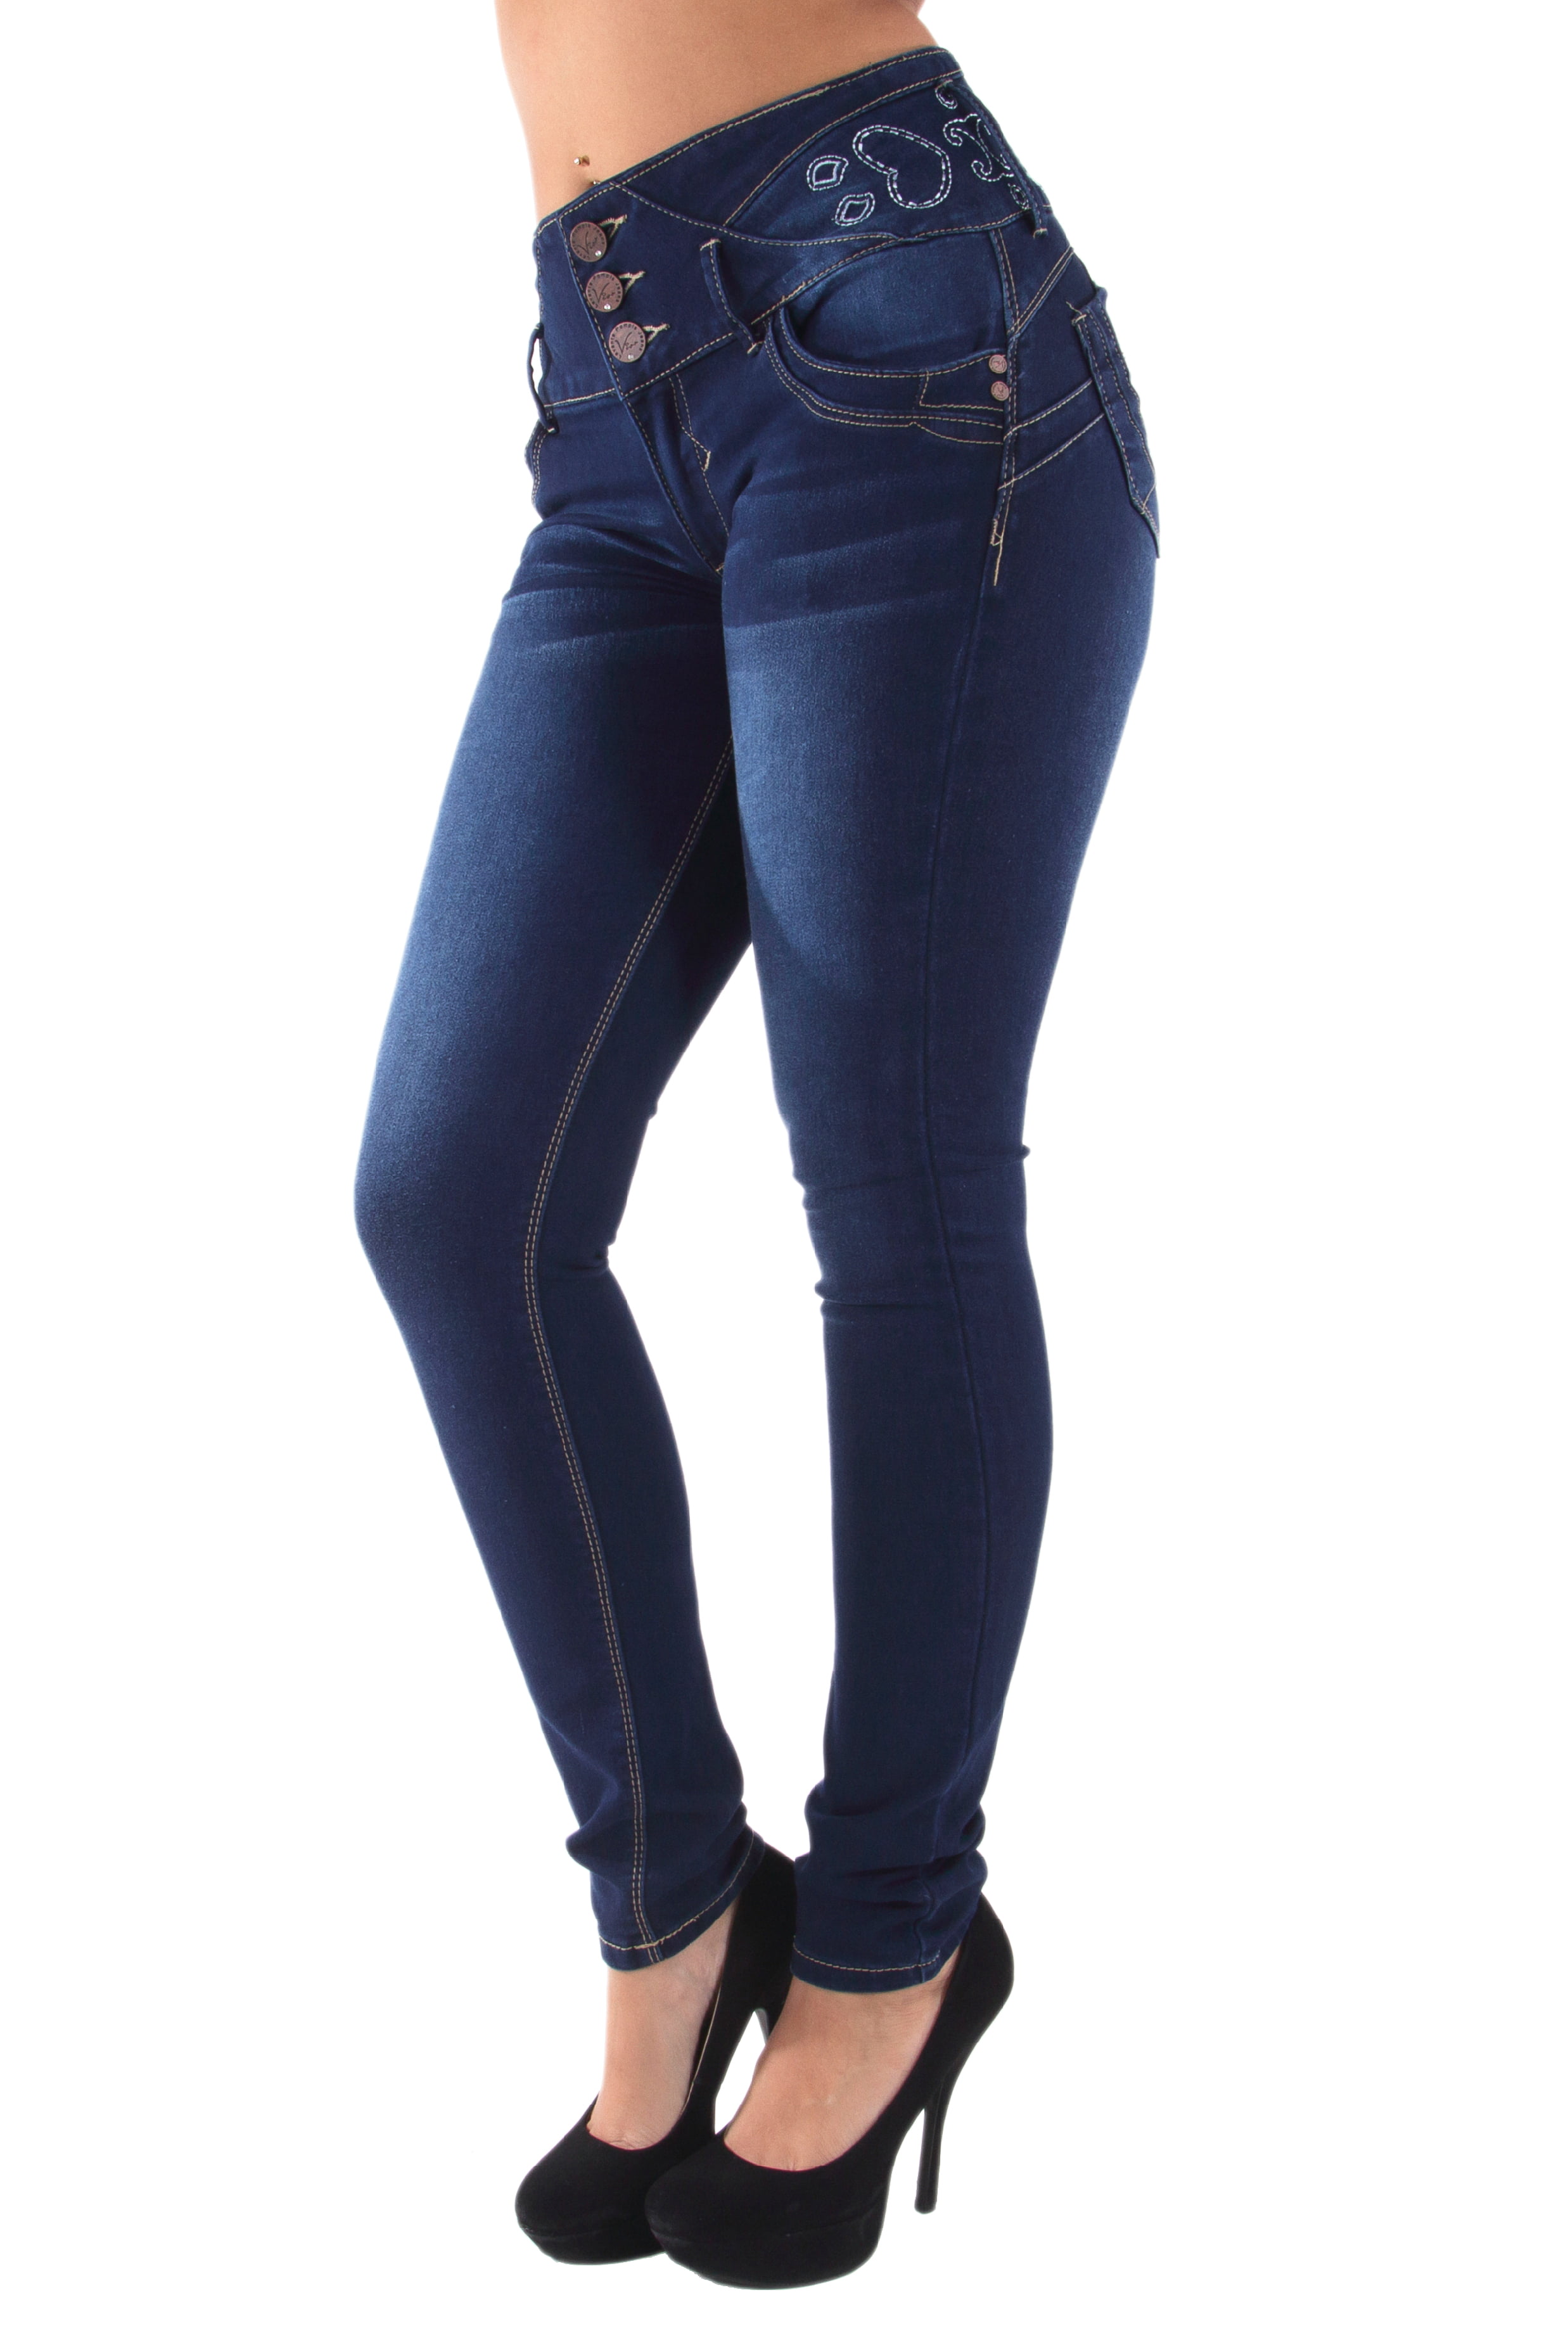 Wide Cuff Cropped Skinny Jeans Butt Lift Women's Juniors Colombian Design 